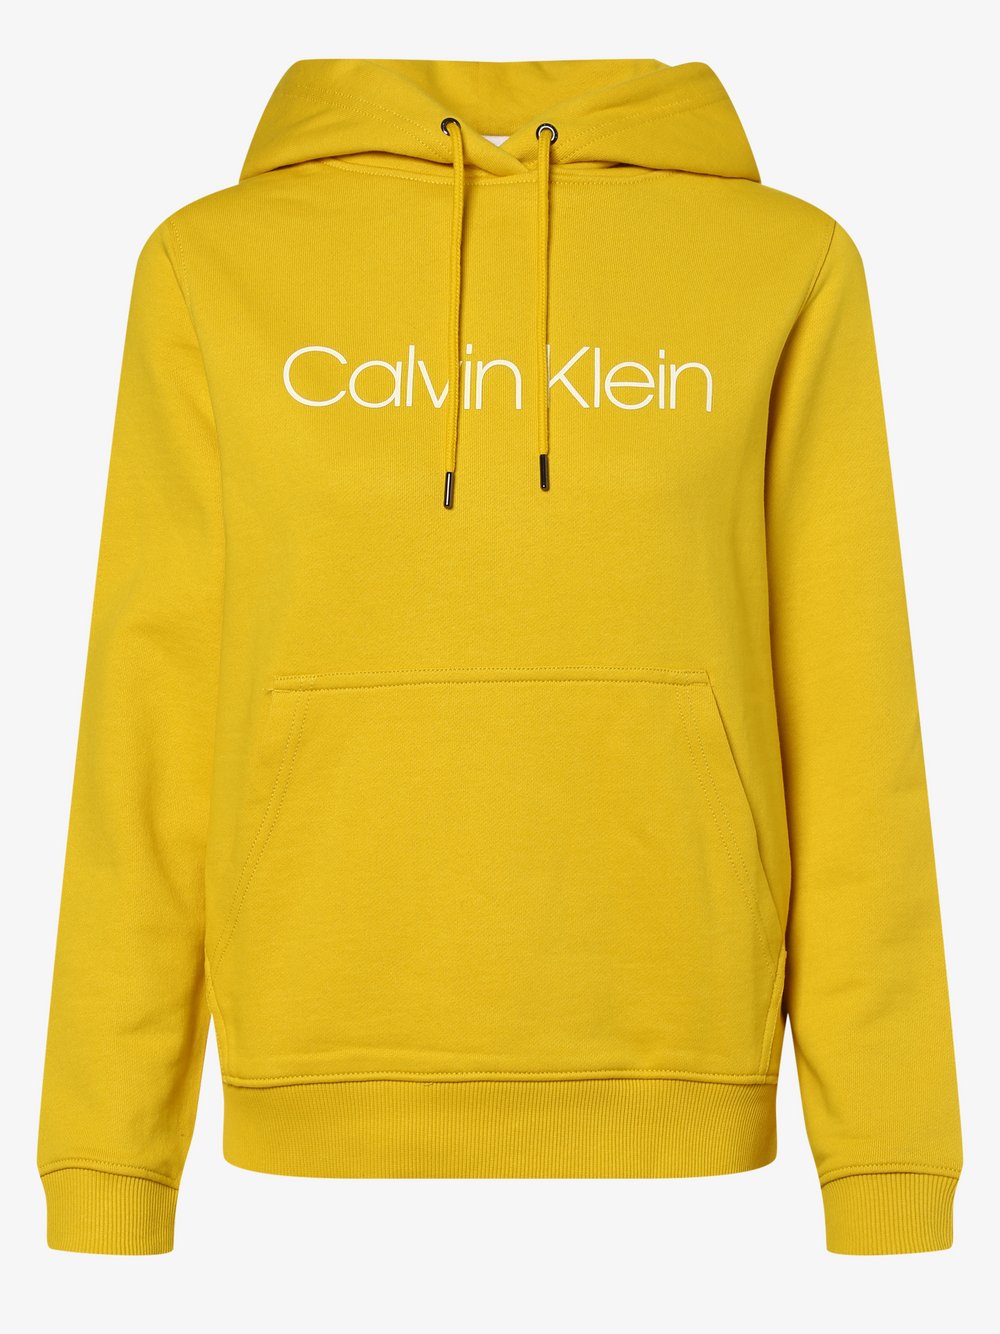 Calvin Klein - Damska bluza z kapturem, żółty